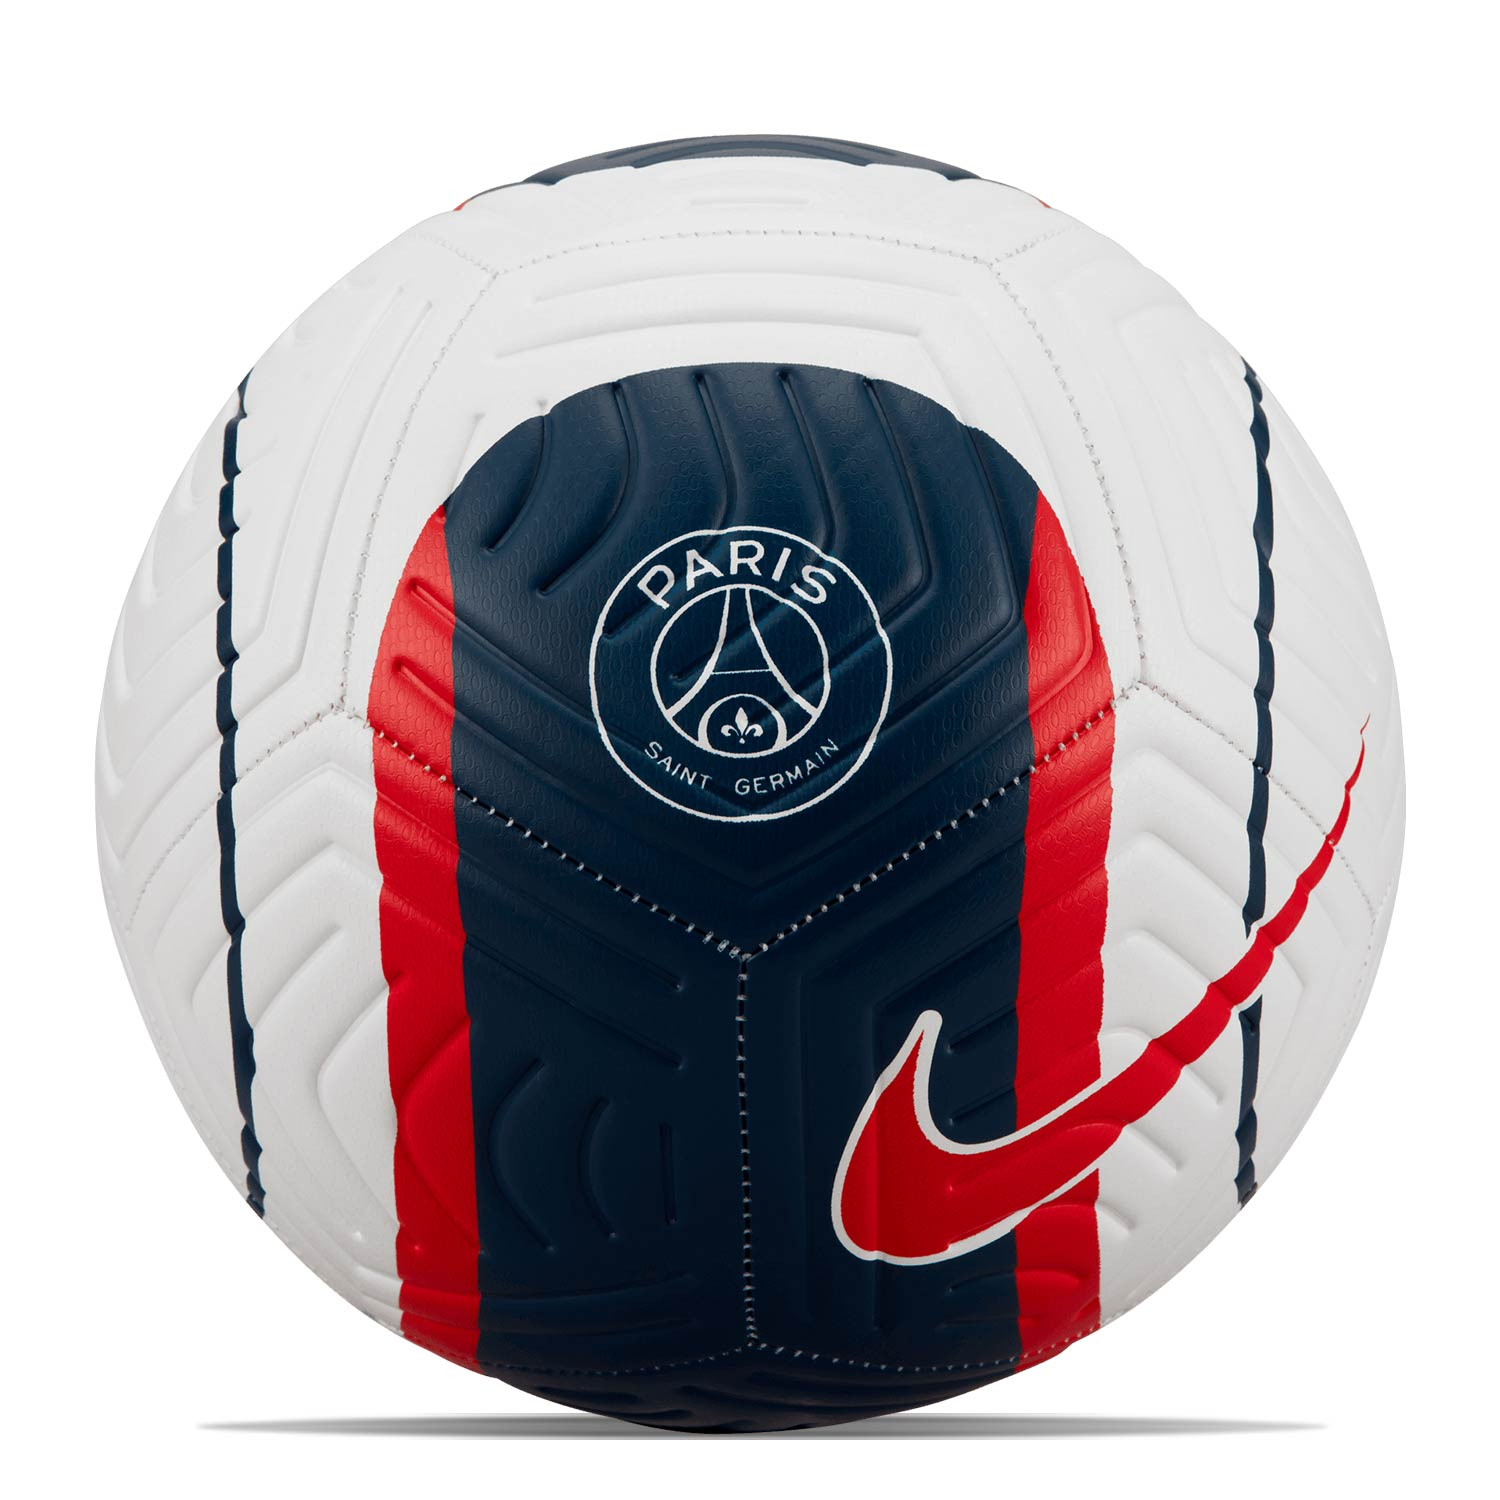 Balón Nike PSG Strike talla 5 blanco y marino | futbolmania